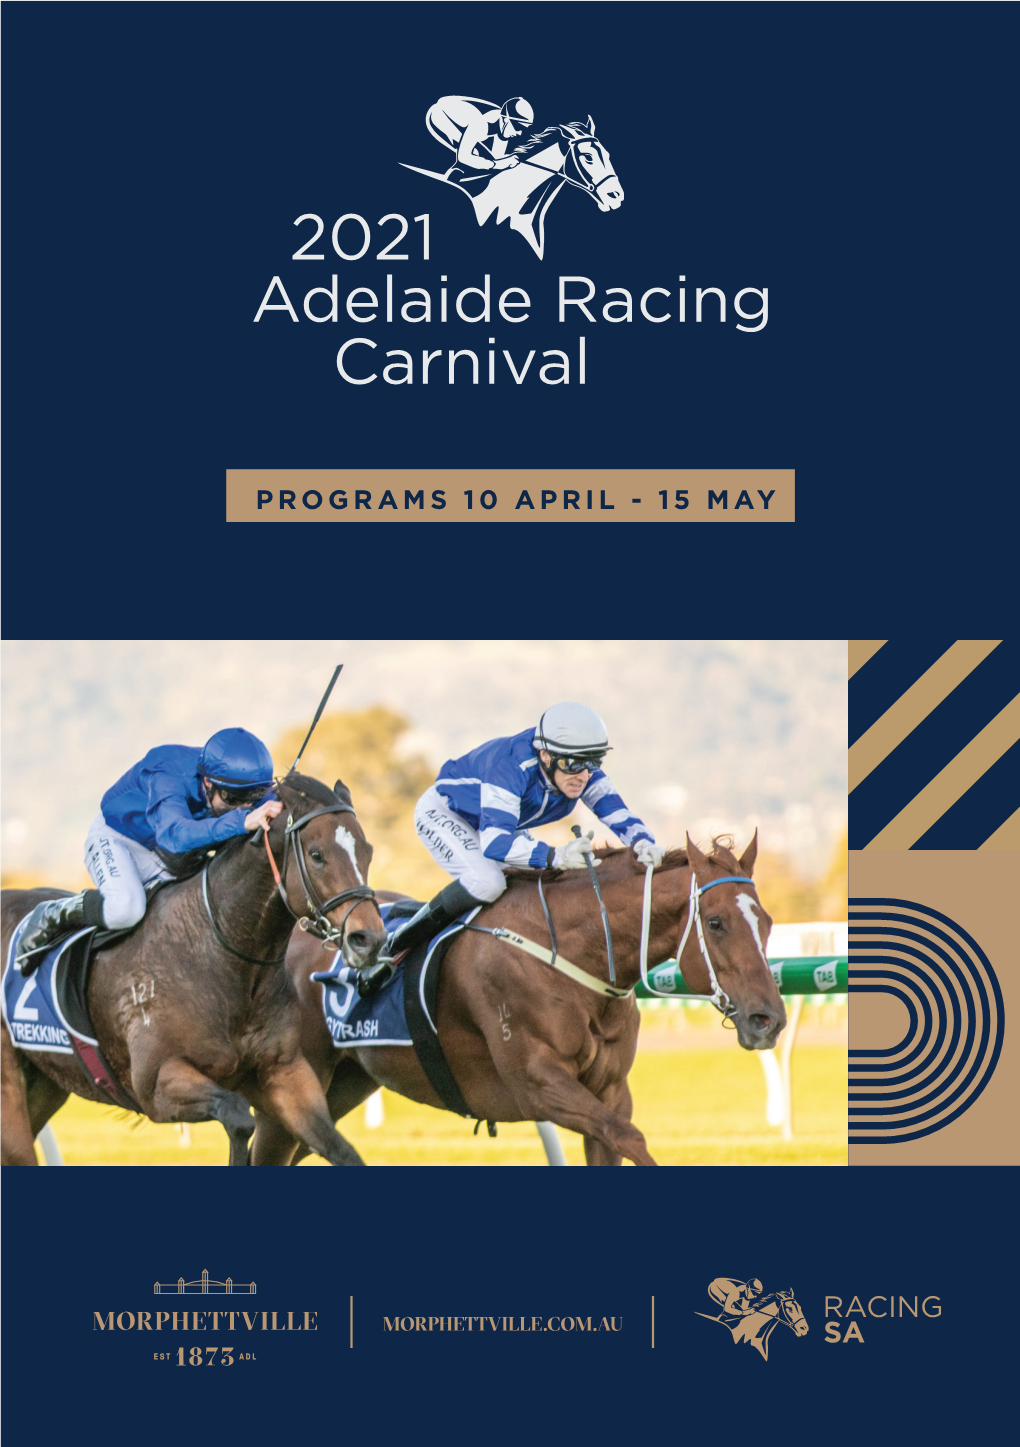 PROGRAMS 10 APRIL - 15 MAY 2021 Adelaide Racing Carnival